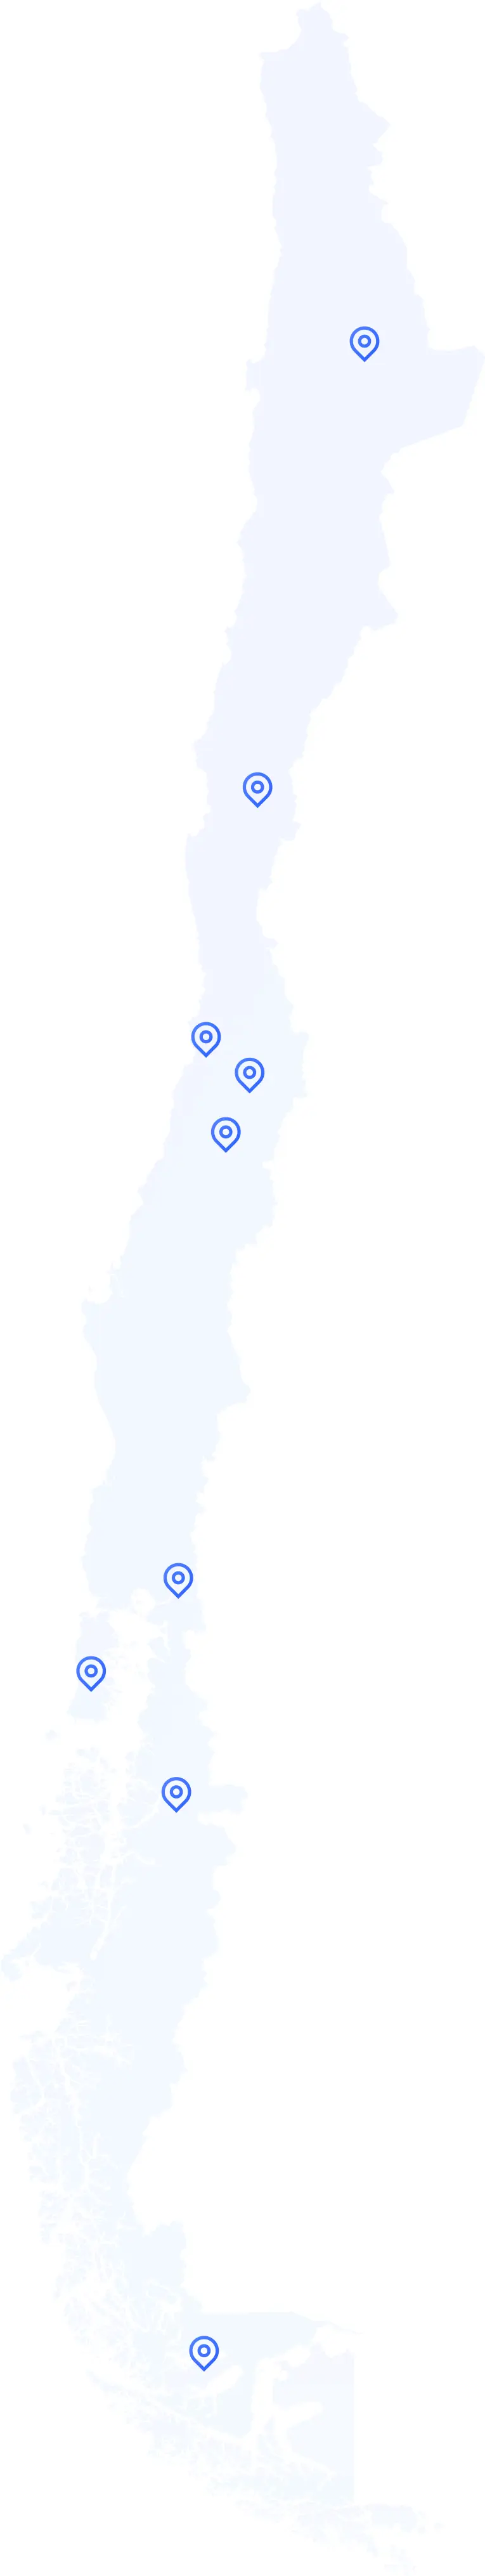 mapa de rutas para chile